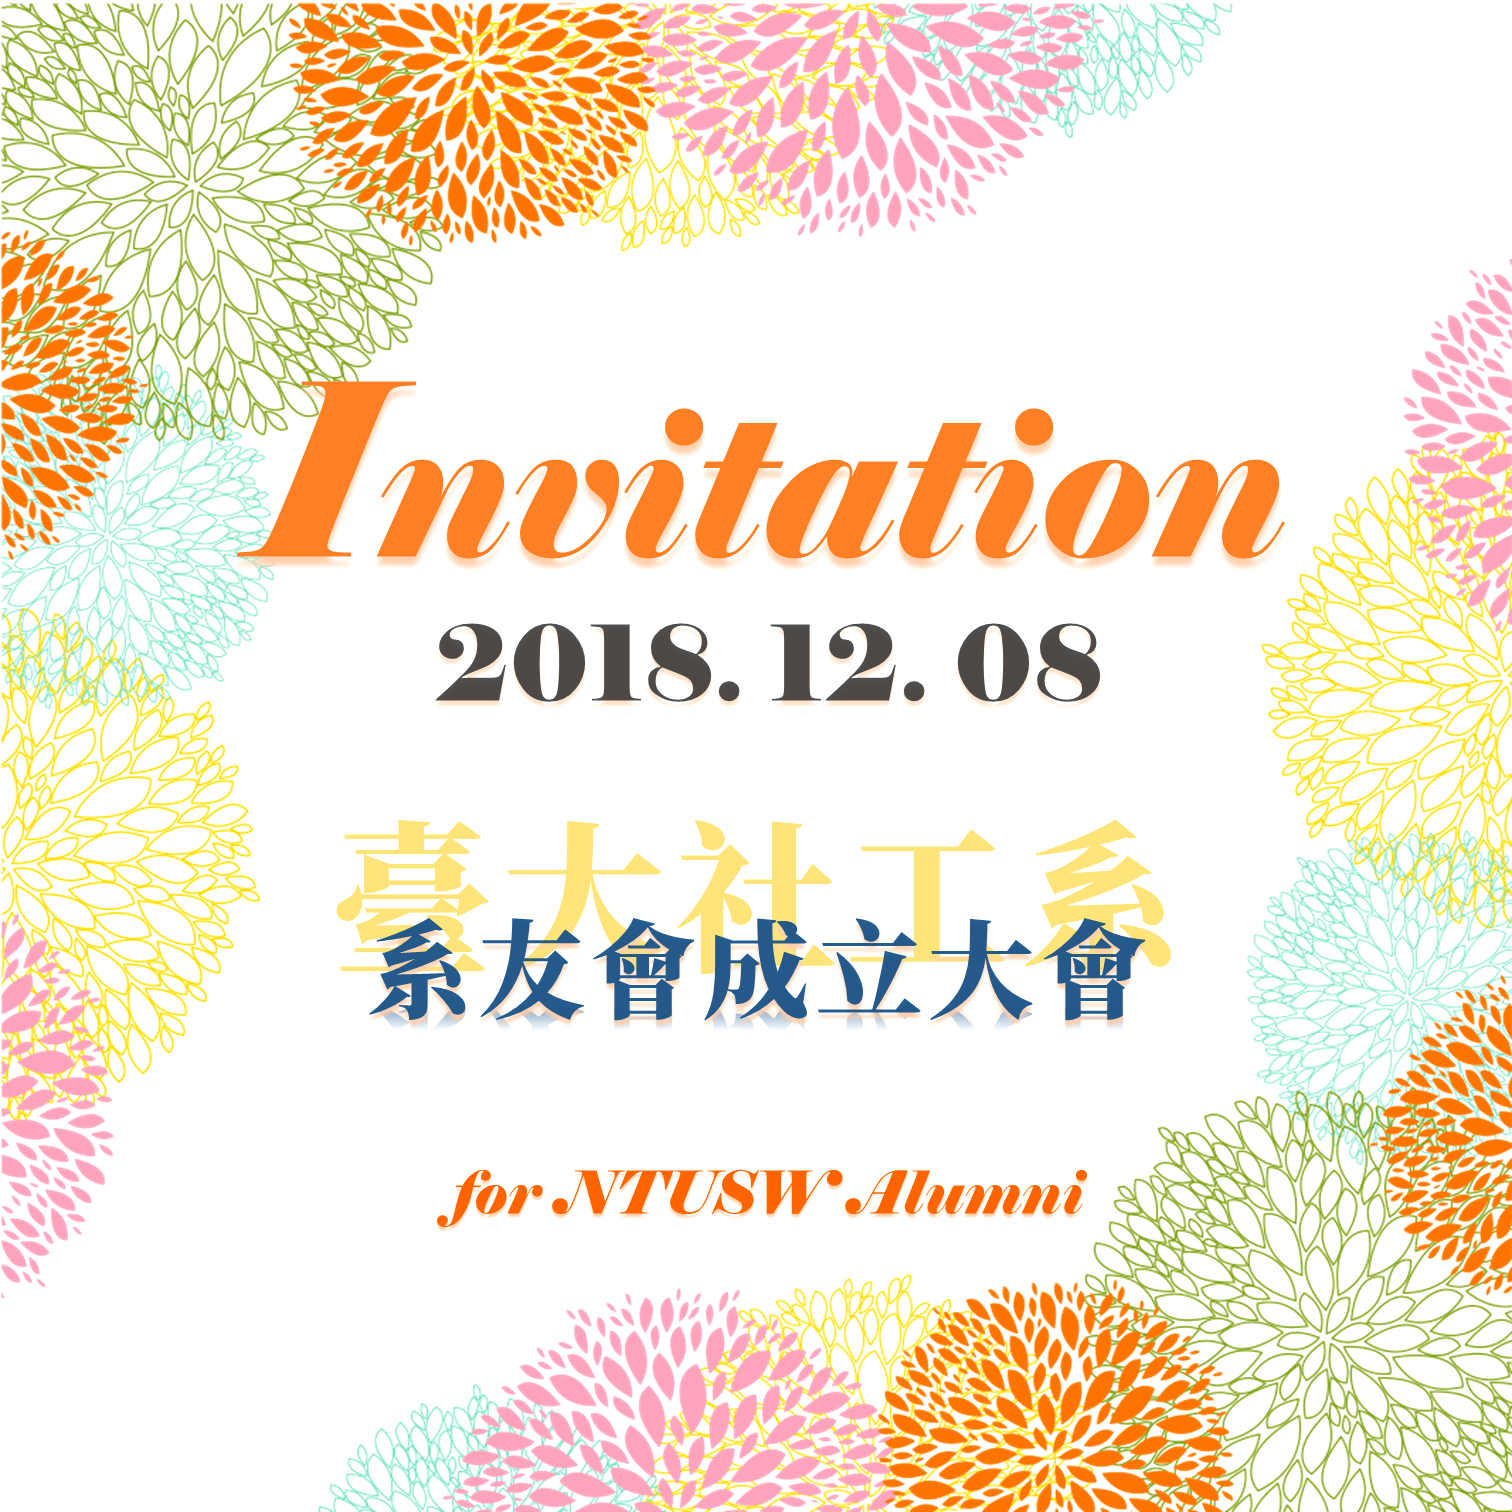 Invitation.png